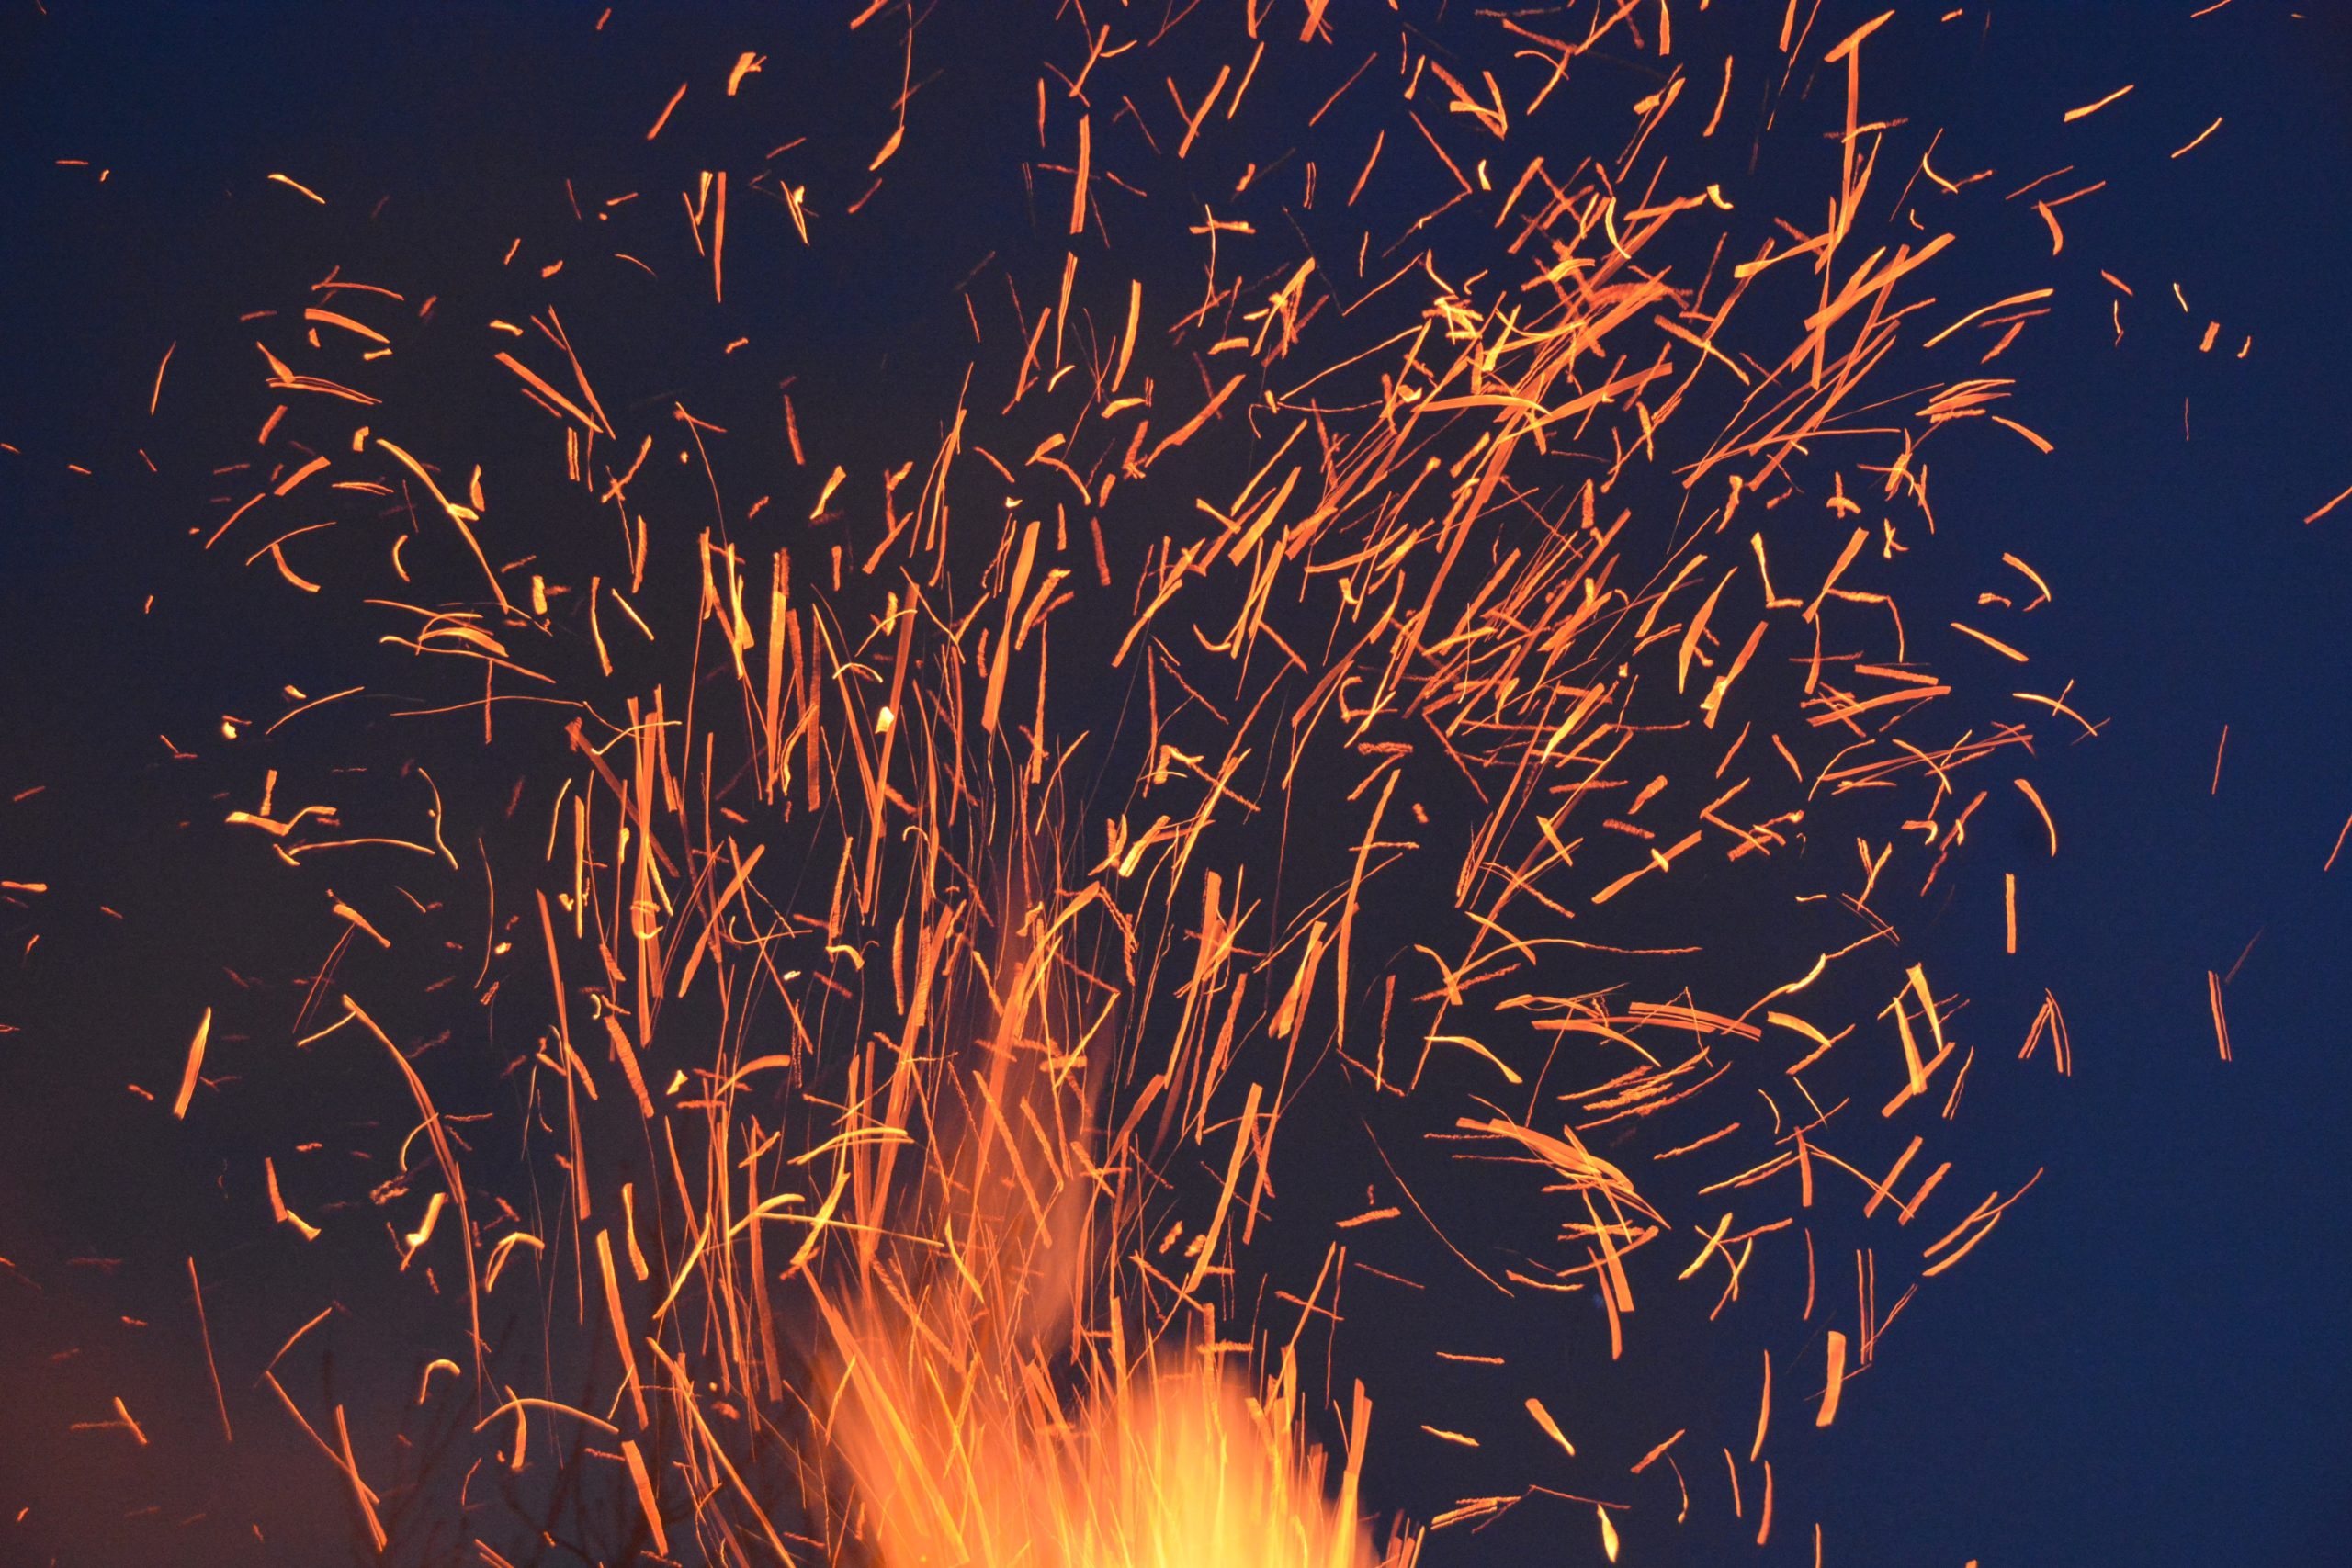 Fiery sparks